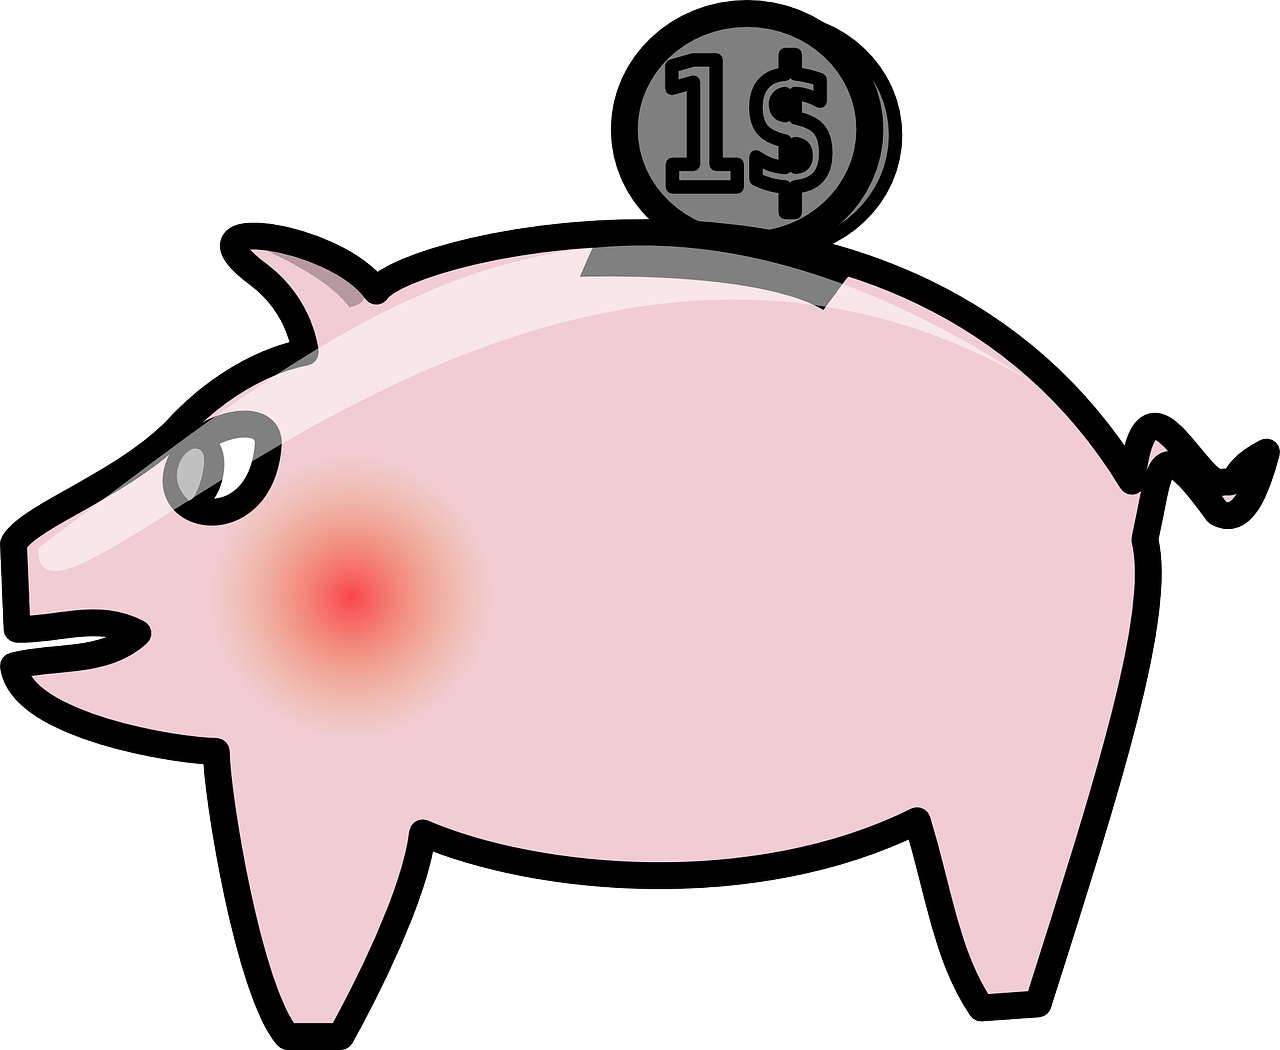 Piggy Bank Black And White 18, - Symbol Of Saving Money (914x750)